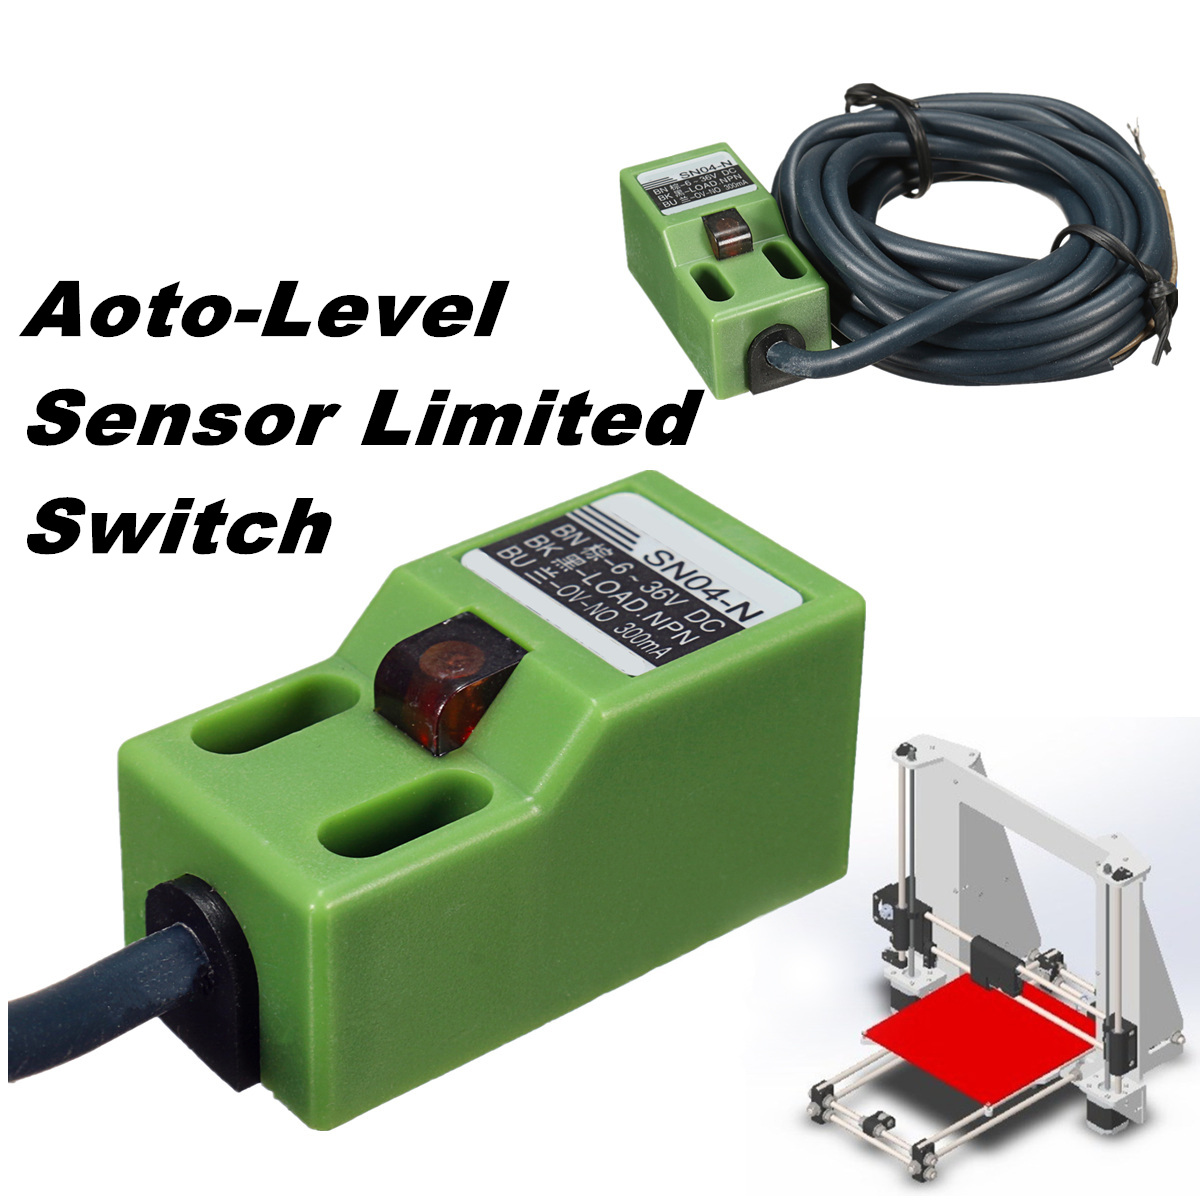 6-36V Auto-Level Sensor Limited Waterproof Switch For Prusa I3 3D Printer 5